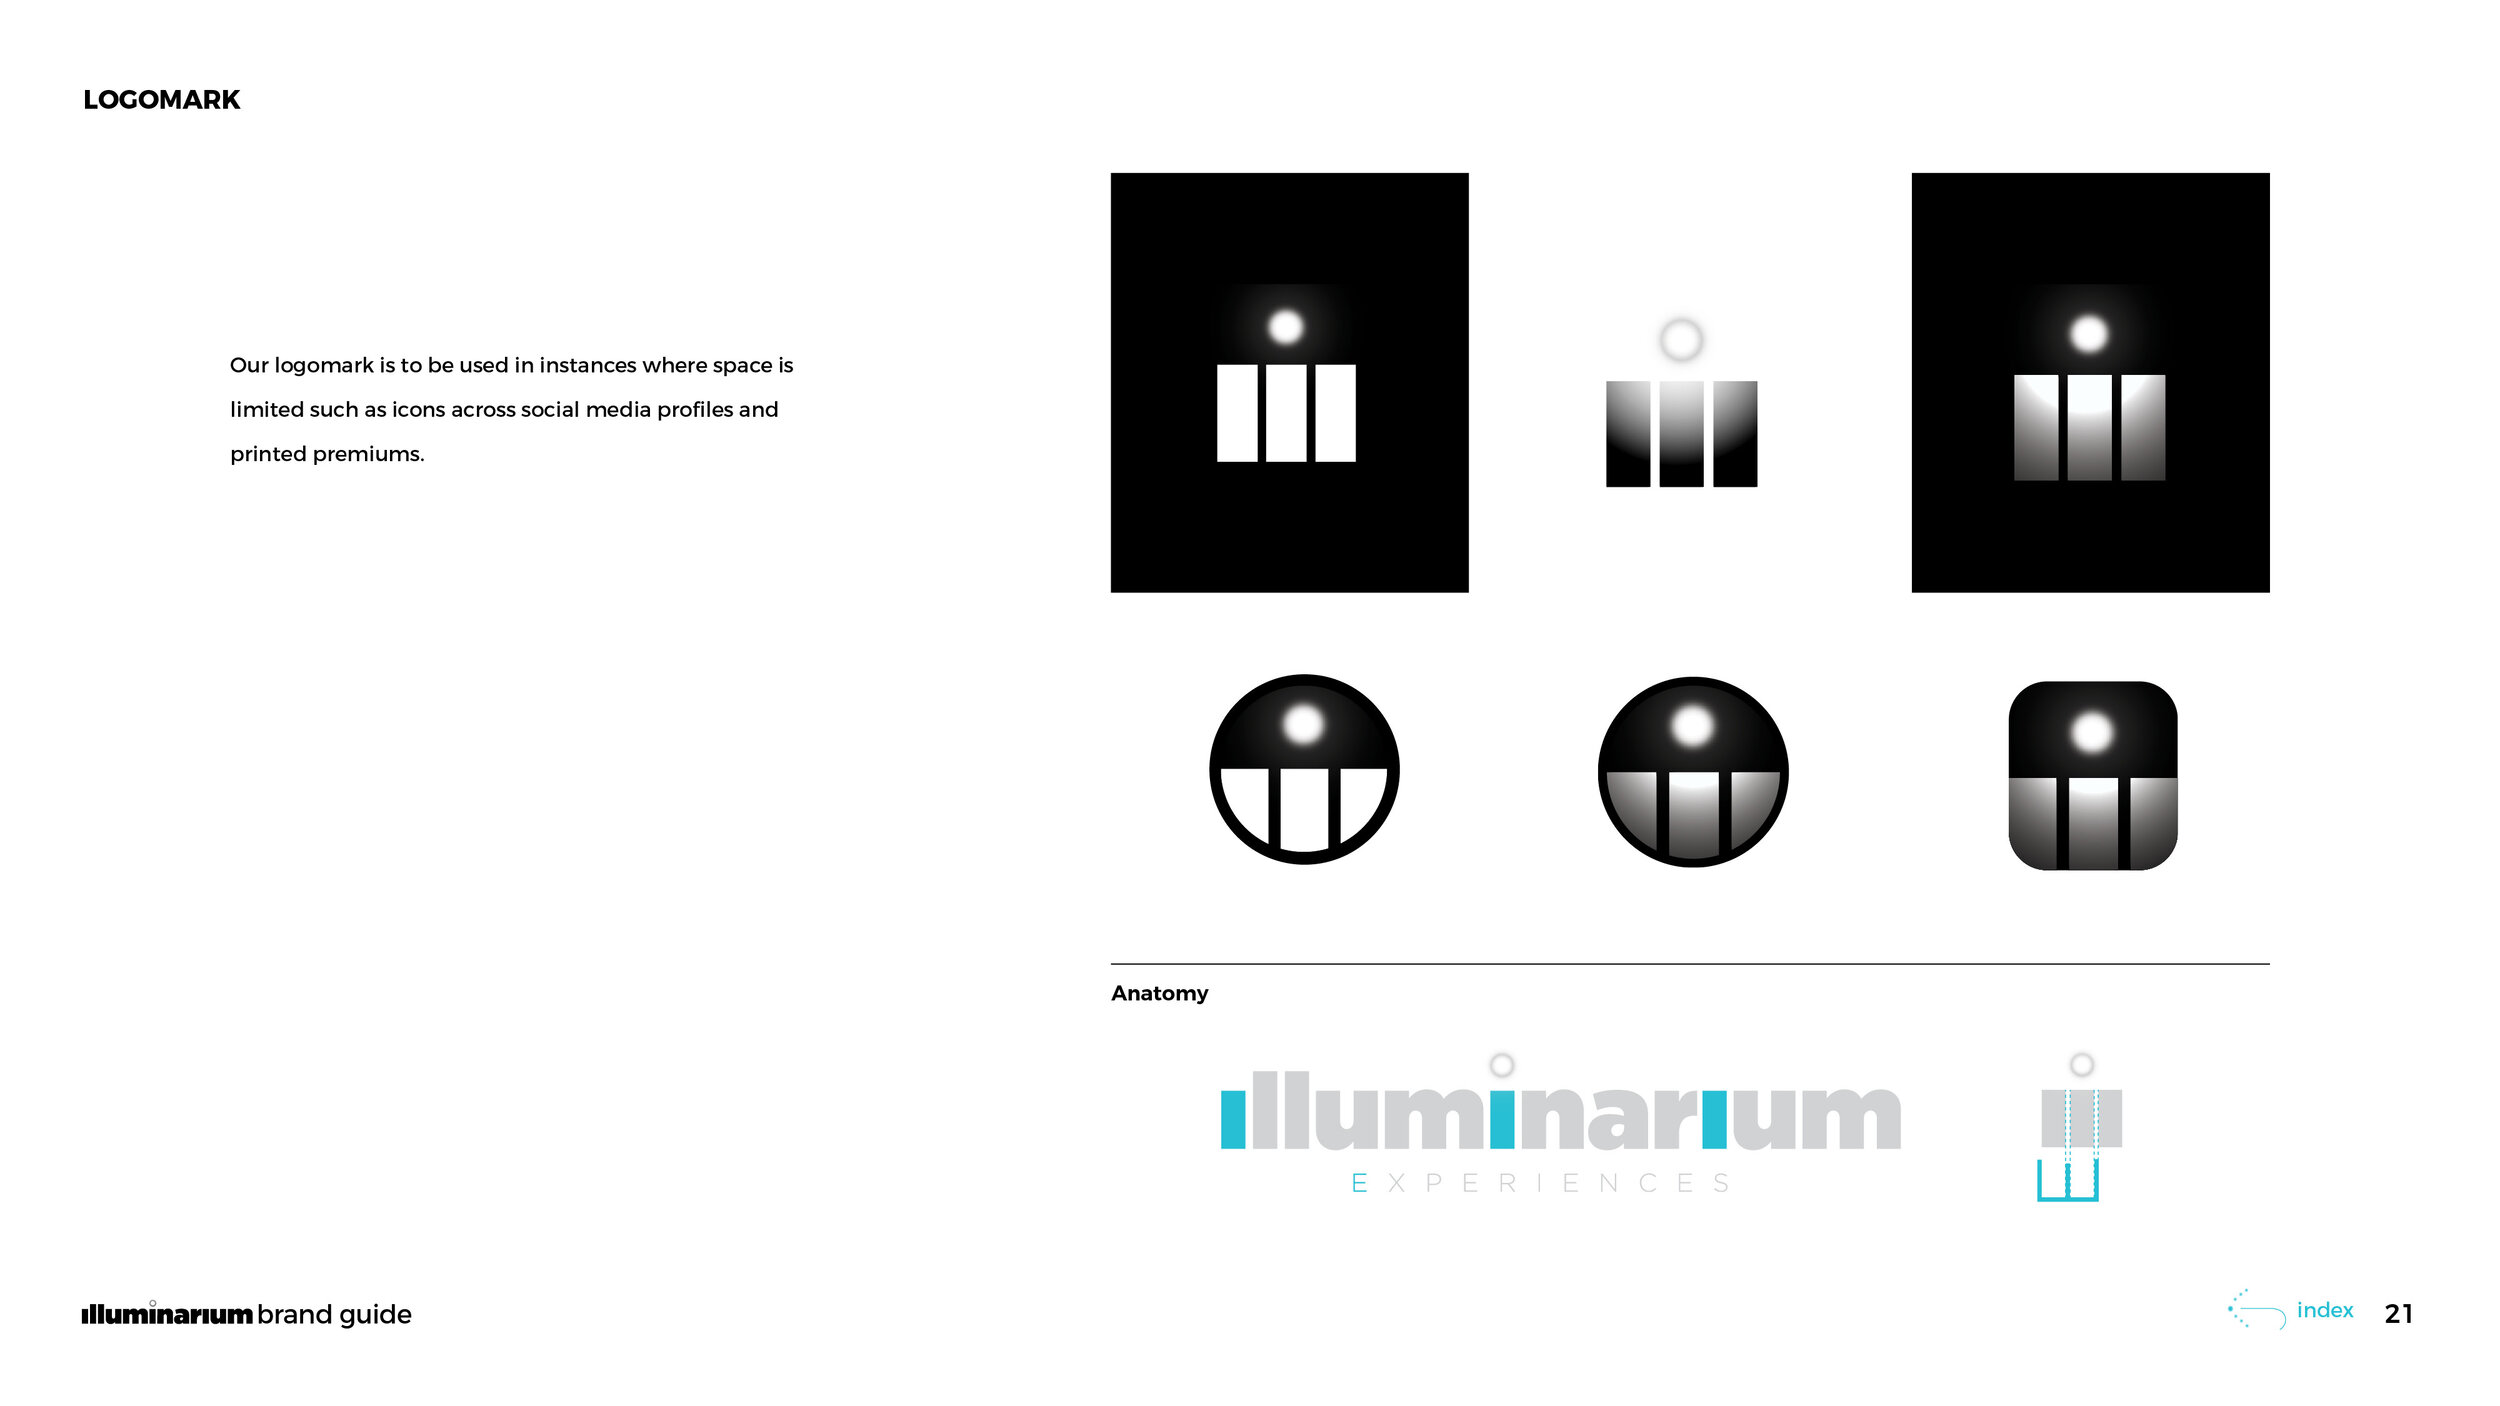 illuminarium_brand guide_16:9_May2020GD_final21.jpg